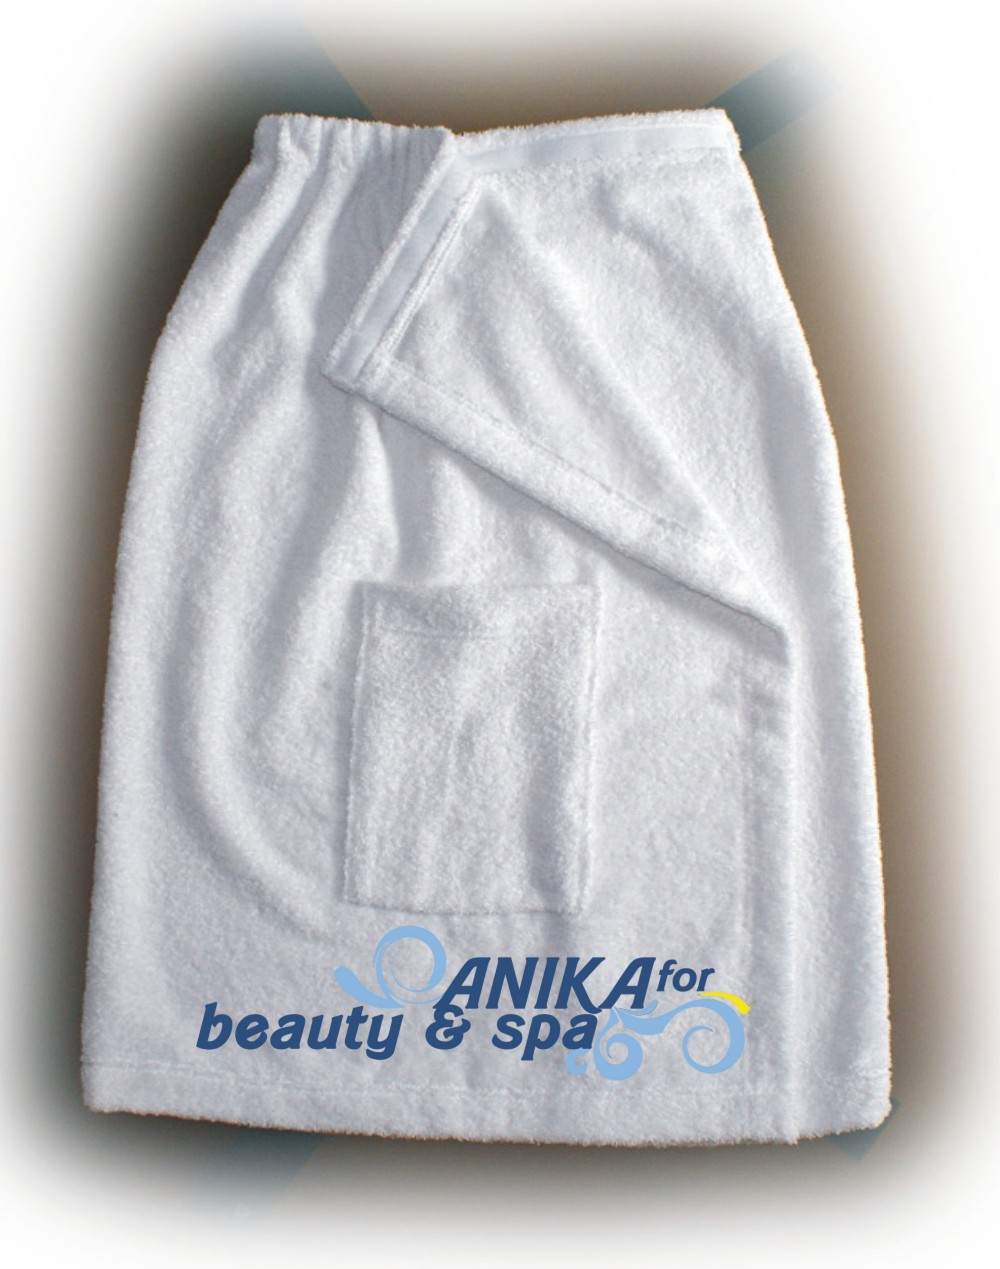 sauna bath towels